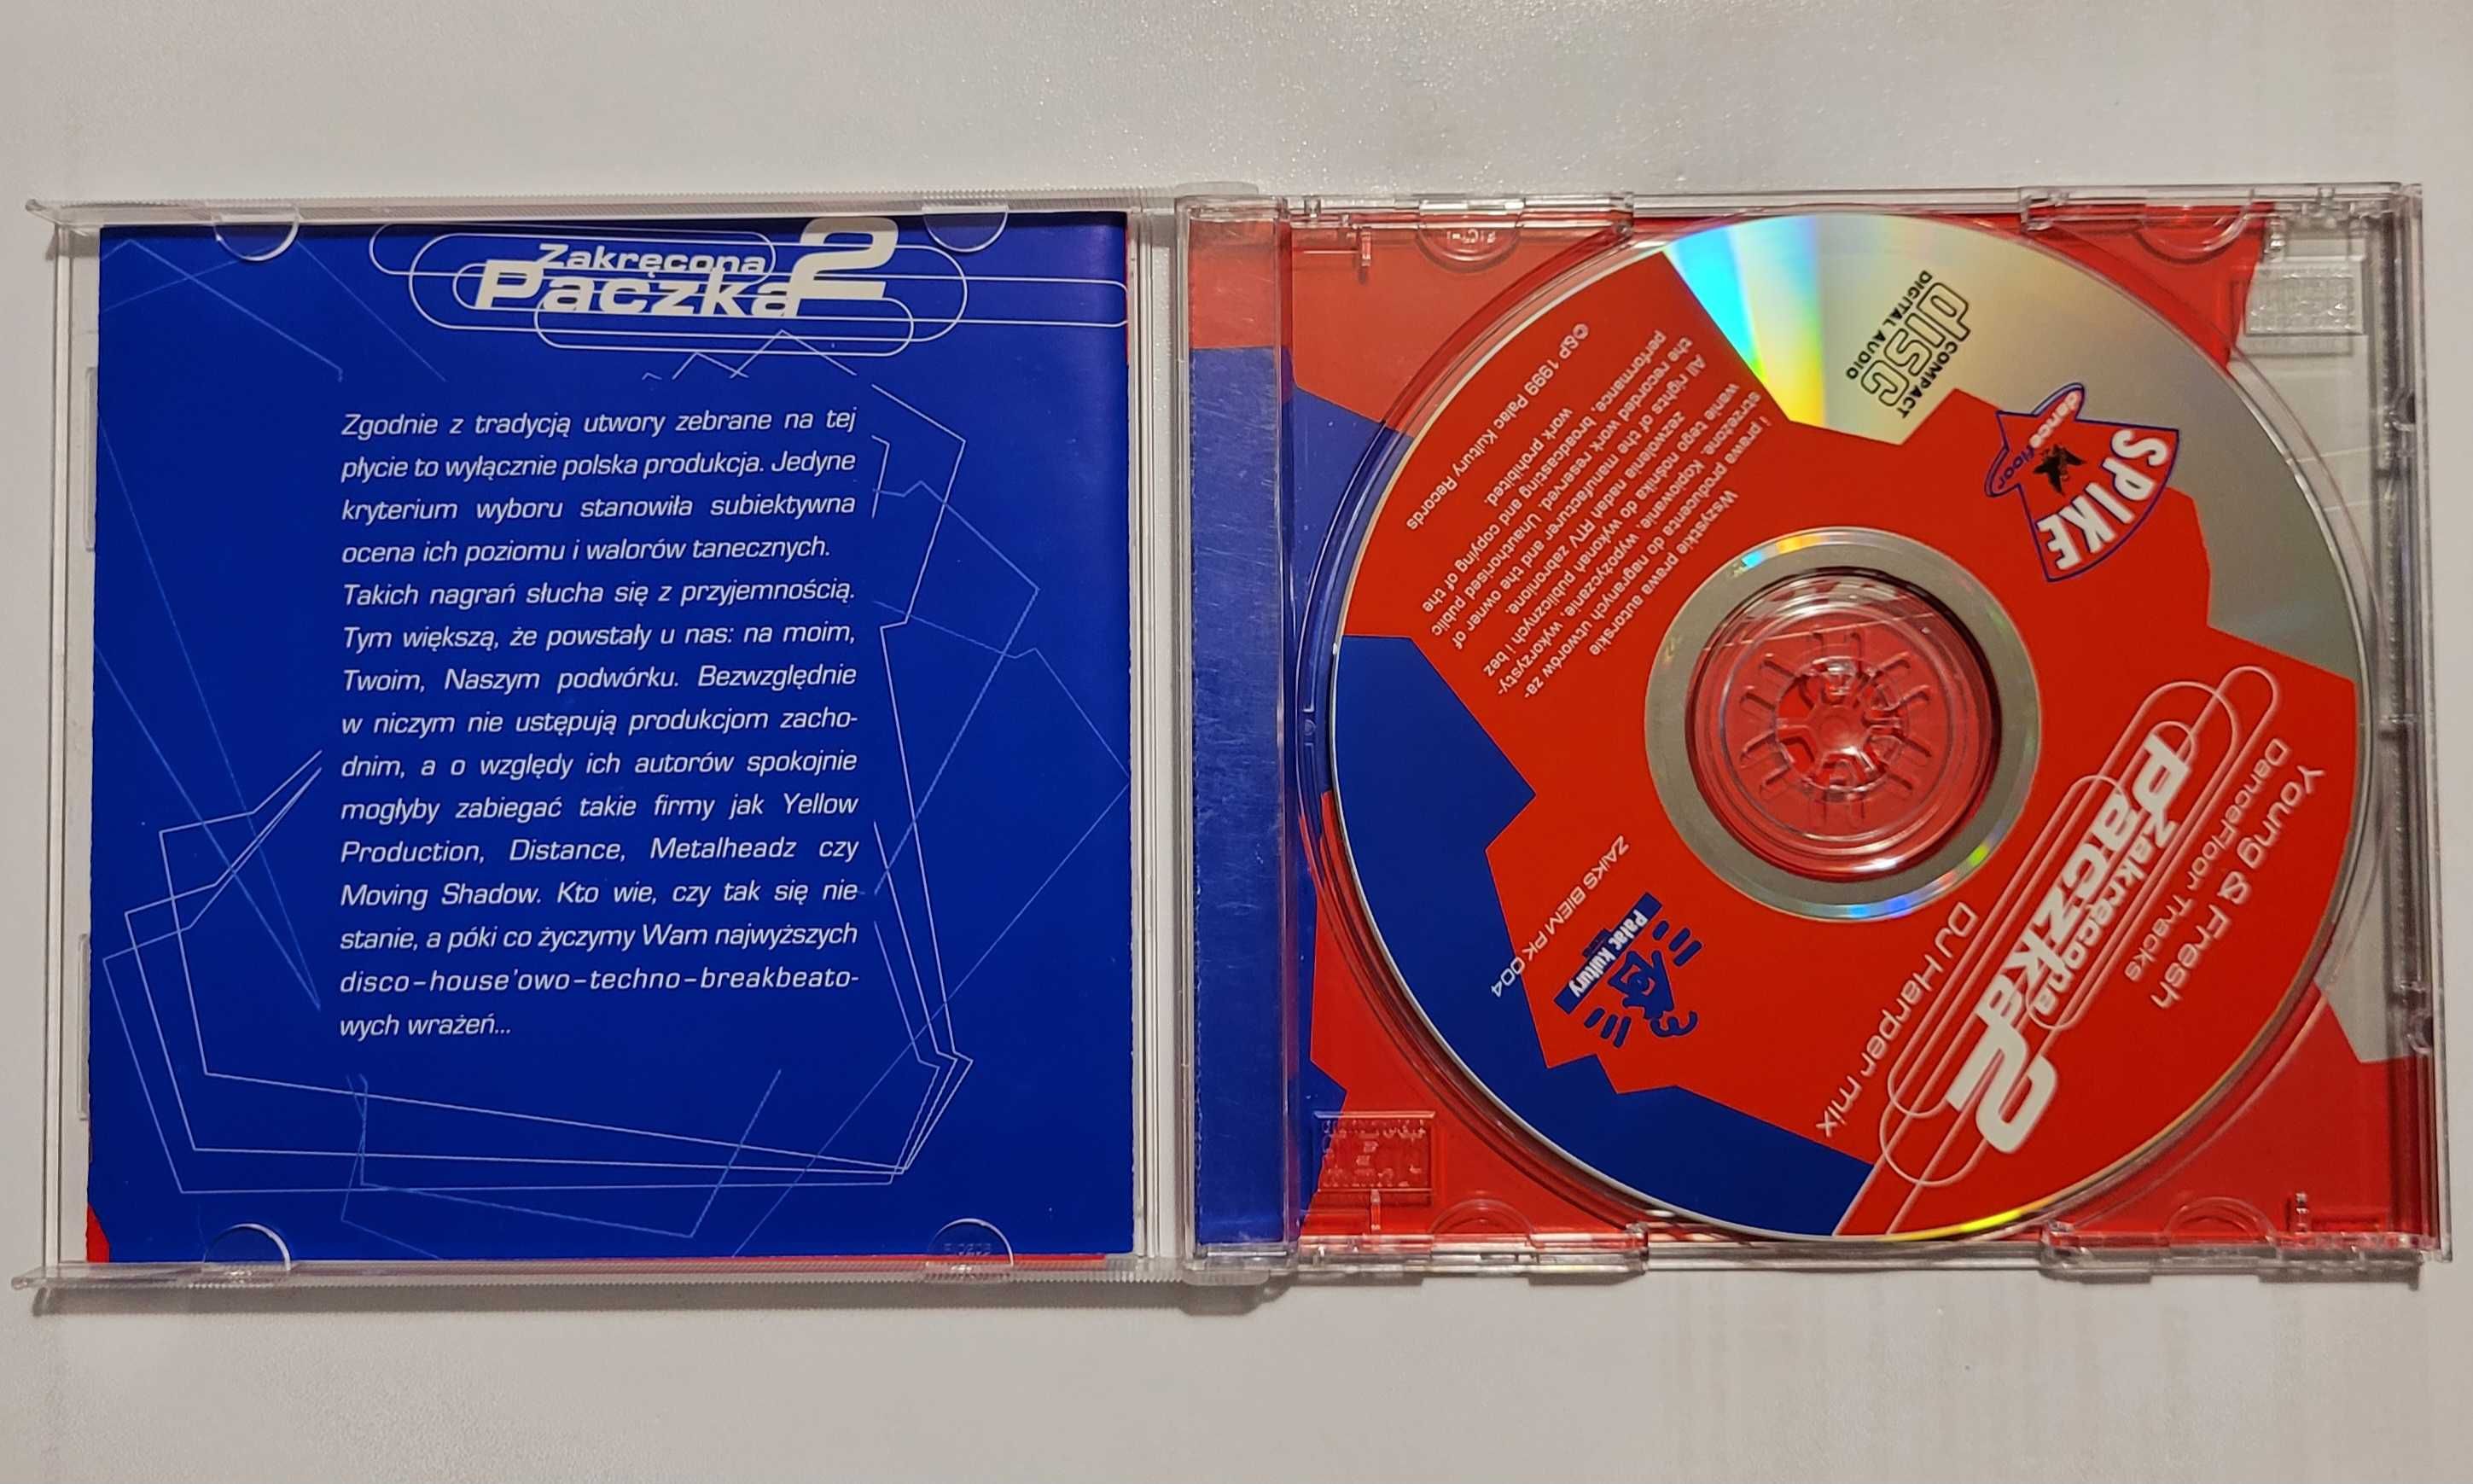 Płyta CD - DJ Harper Mix, "Zakręcona paczka 2"